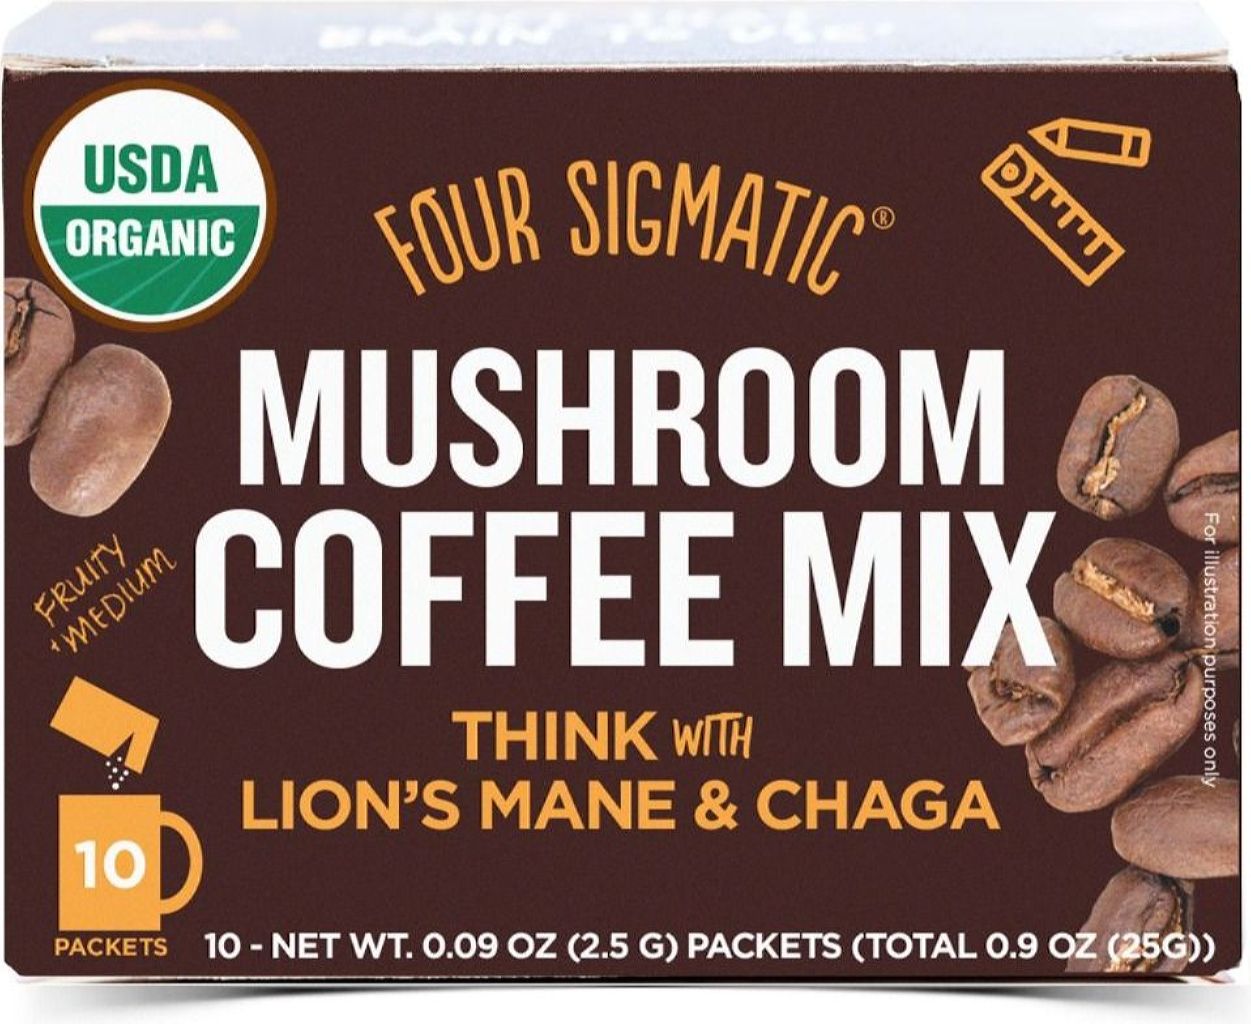 Four Sigmatic Mushroom Coffee Mix with Lions Mane & Chaga